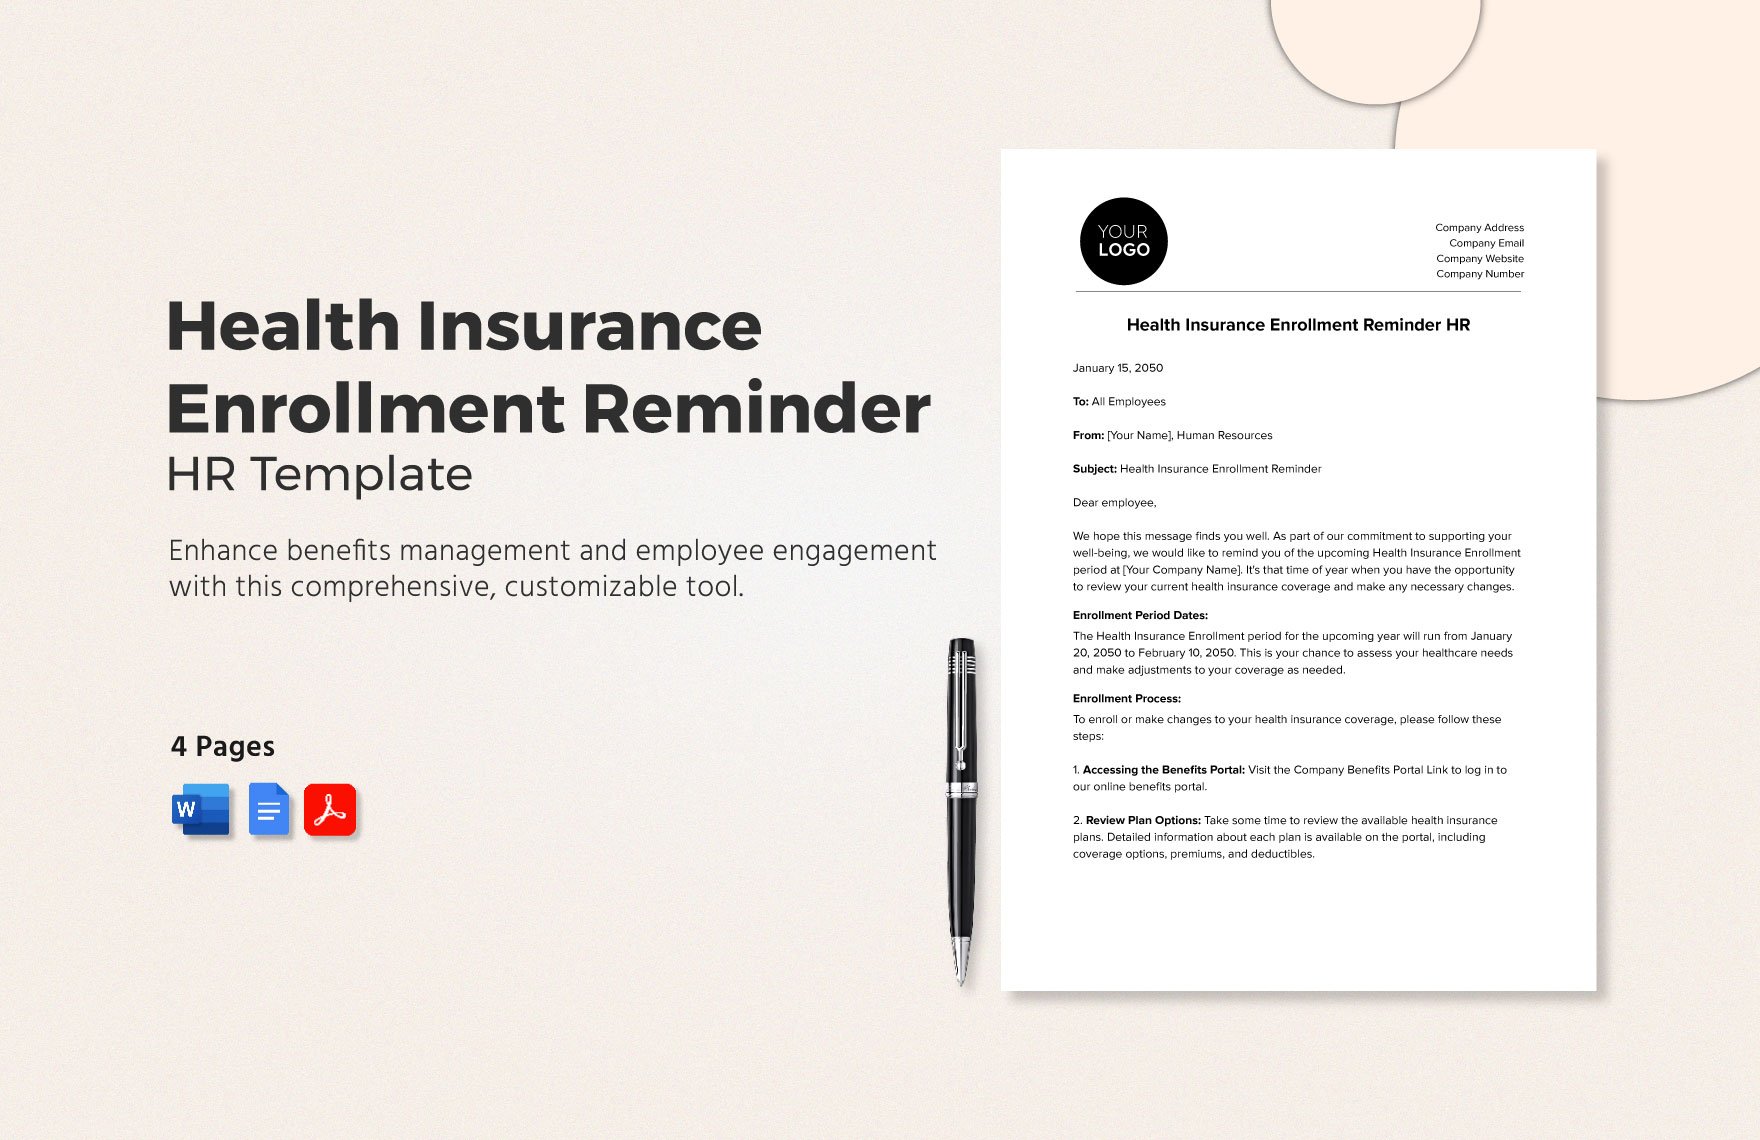 Health Insurance Enrollment Reminder HR Template in Word, Google Docs, PDF